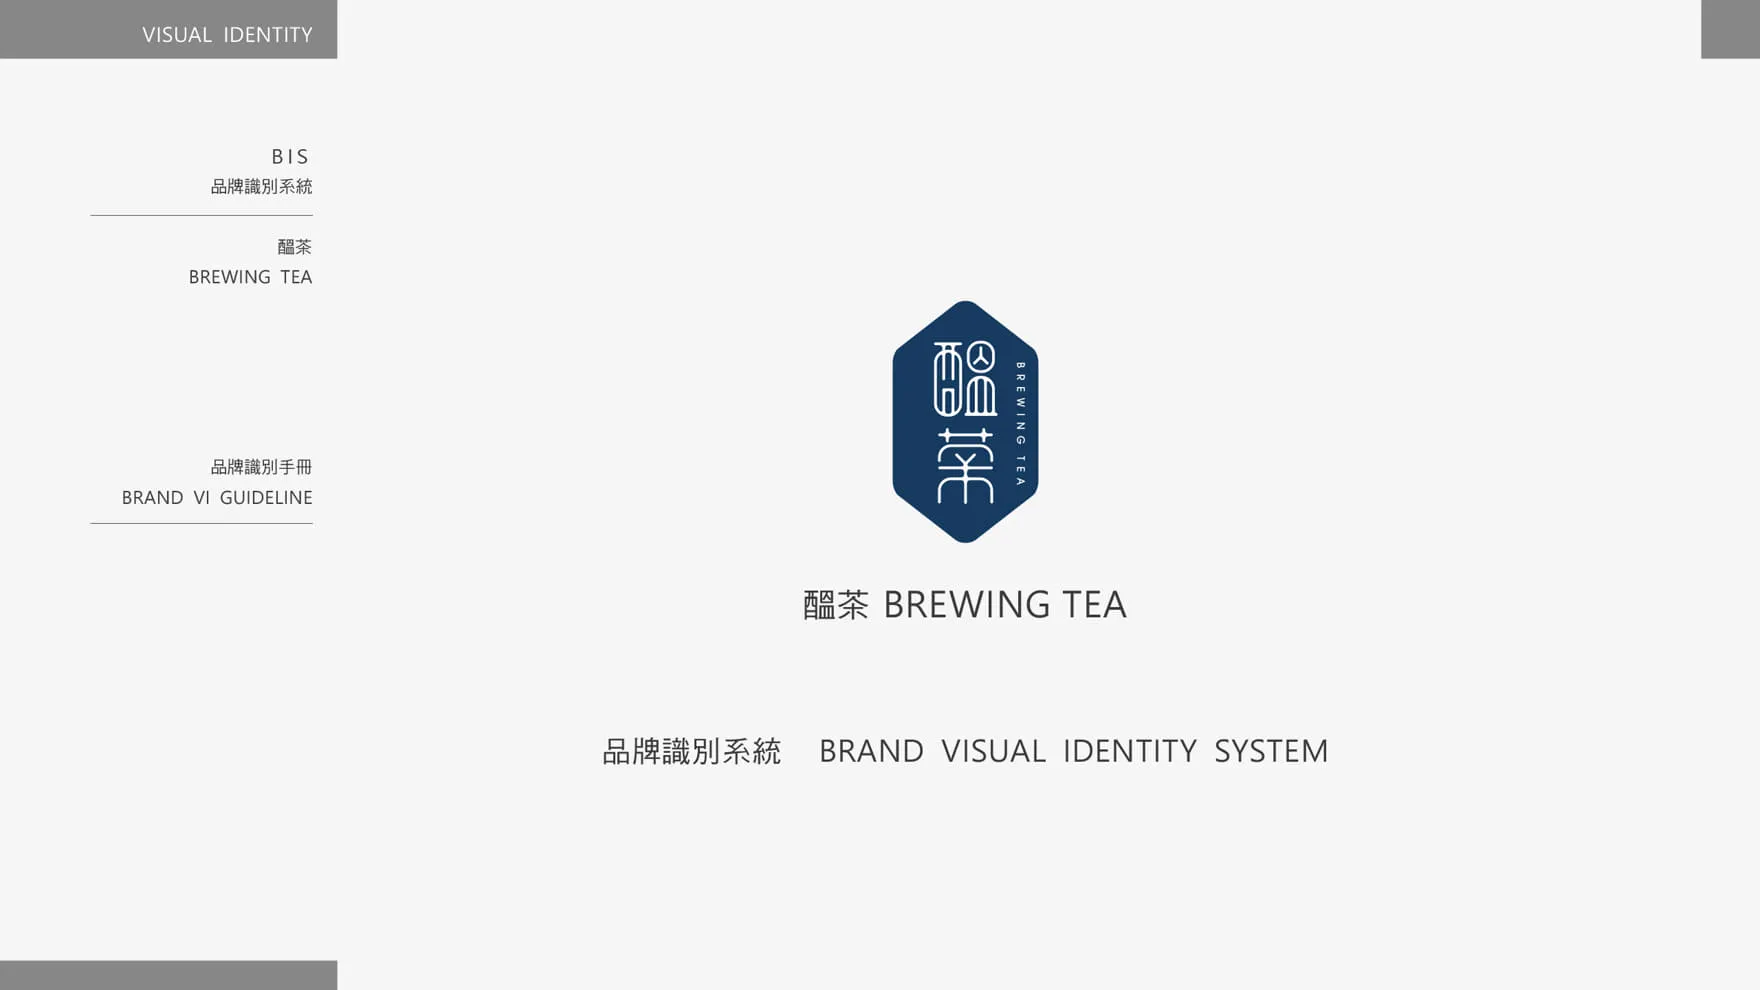 茶飲品牌識別手冊 Brand visual identity system guidelines